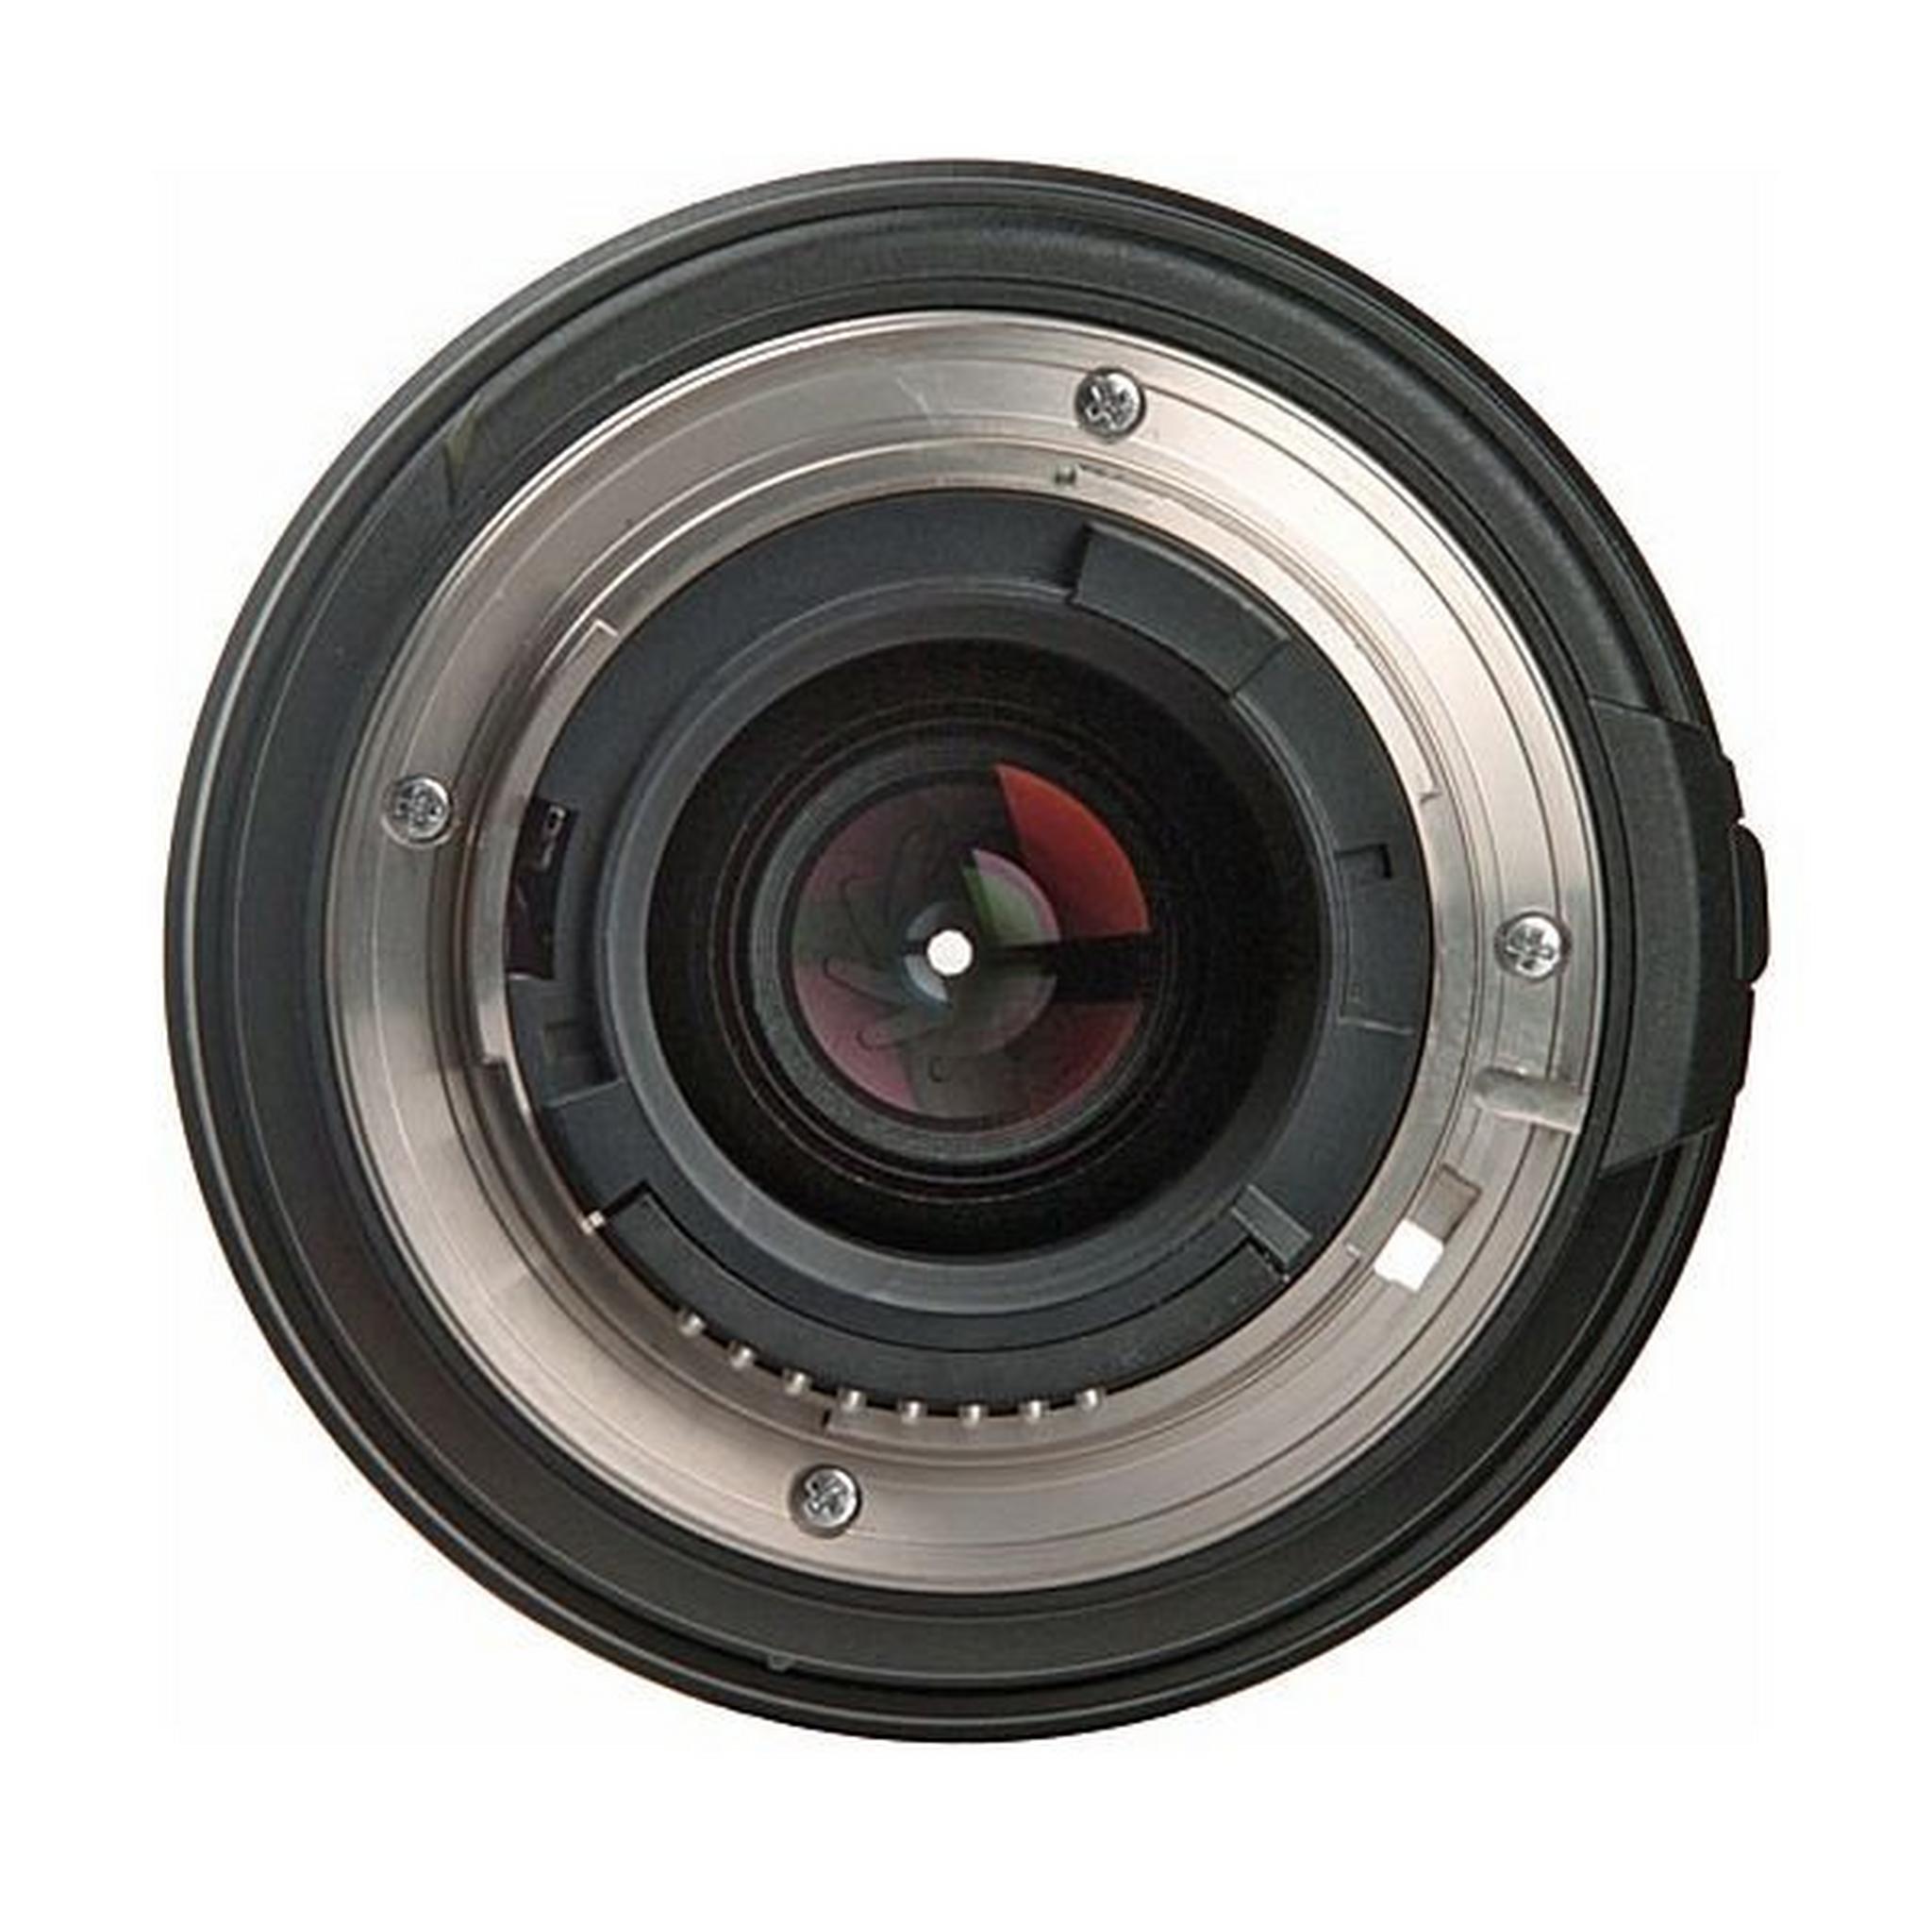 Tamron 70-300mm f/4-5.6 Di LD Macro Autofocus Lens for Nikon DSLR Camera